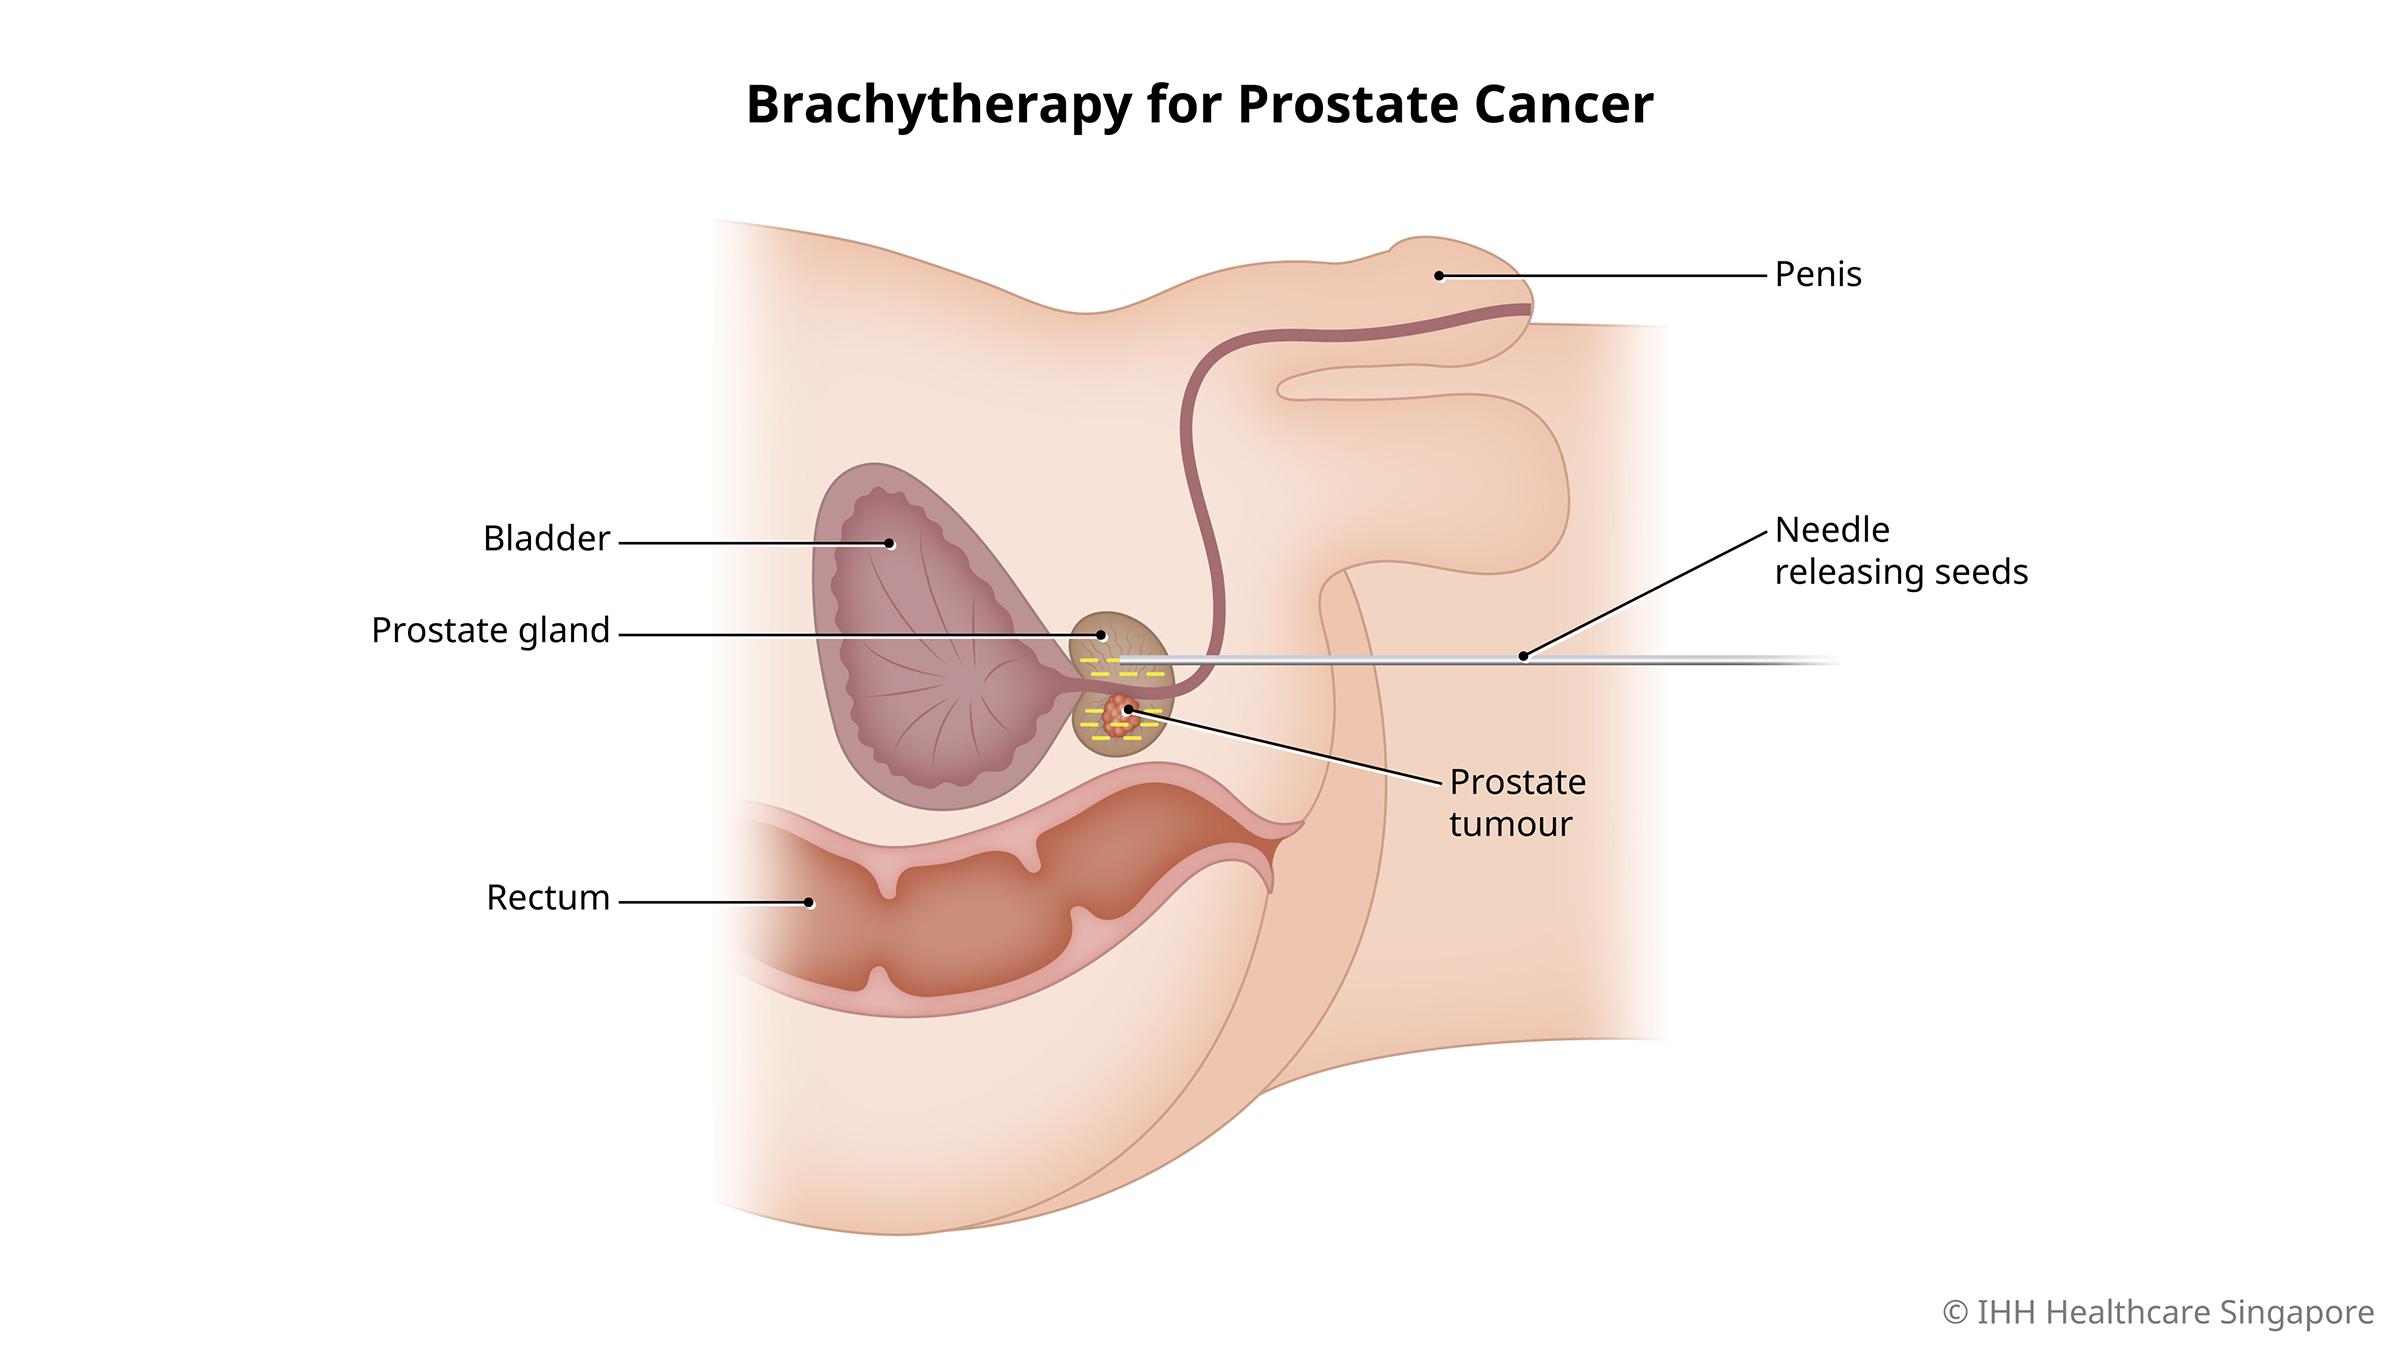 Brachytherapy for Prostate Cancer